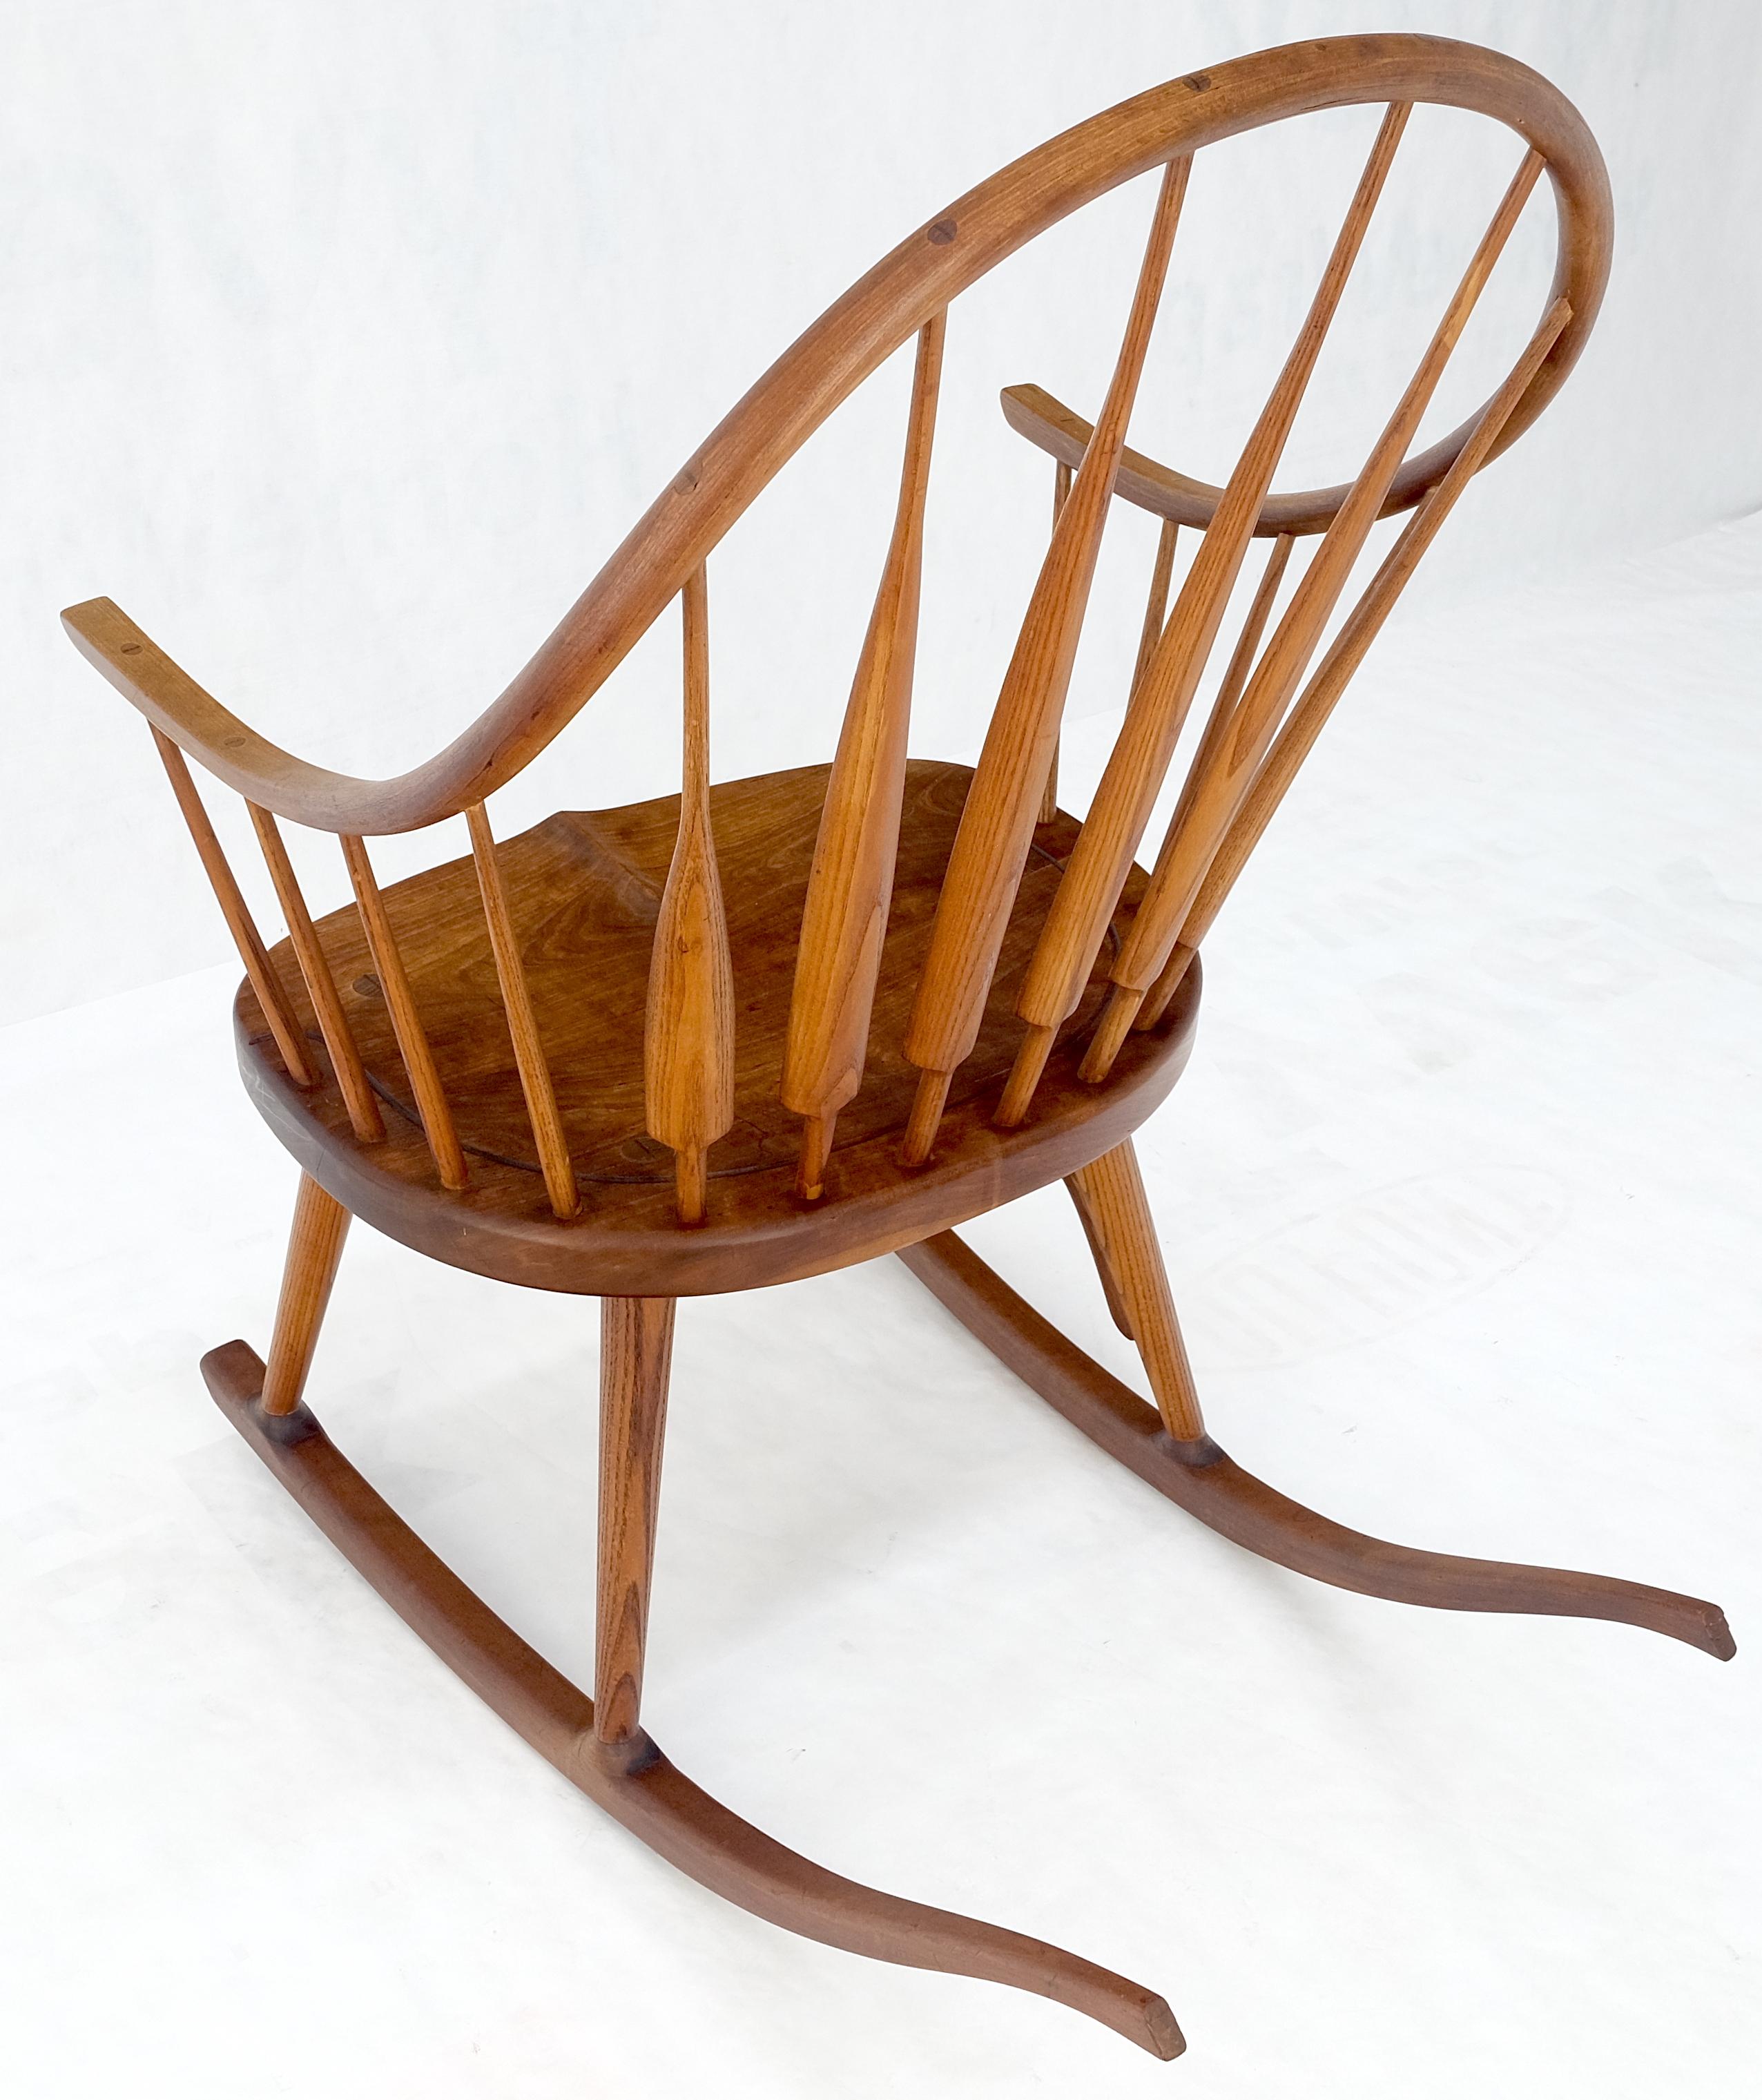 Artistics & Crafts Signed Studio Made Solid Chestnut Rocking Chair Peg Joints Mint !